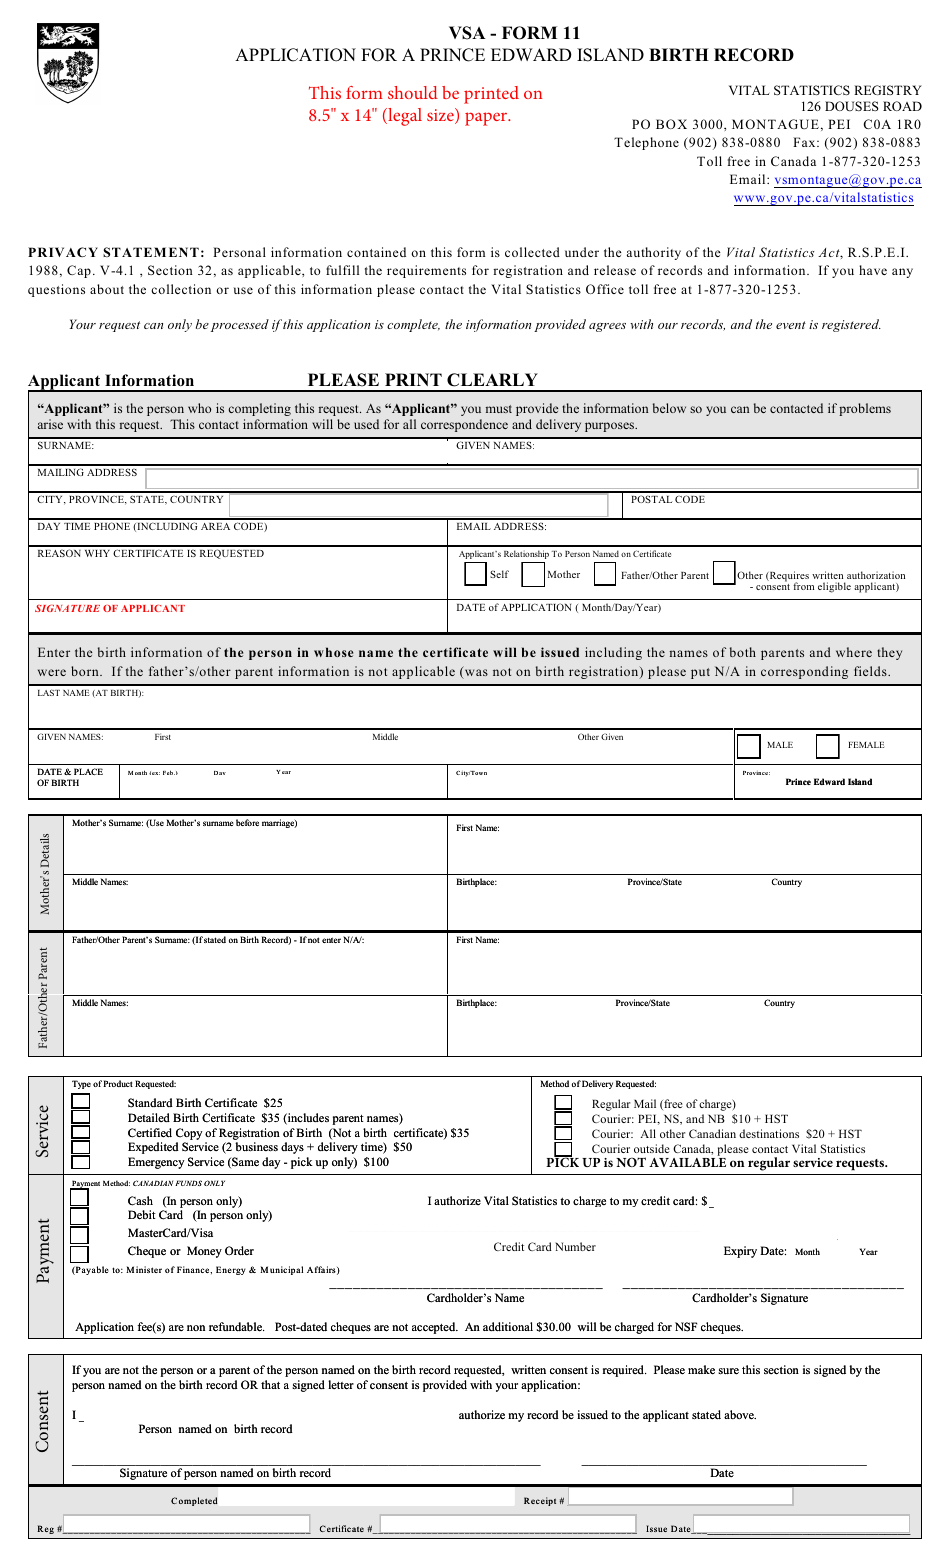 VSA Form 11 Application for a Prince Edward Island Birth Record - Prince Edward Island, Canada, Page 1